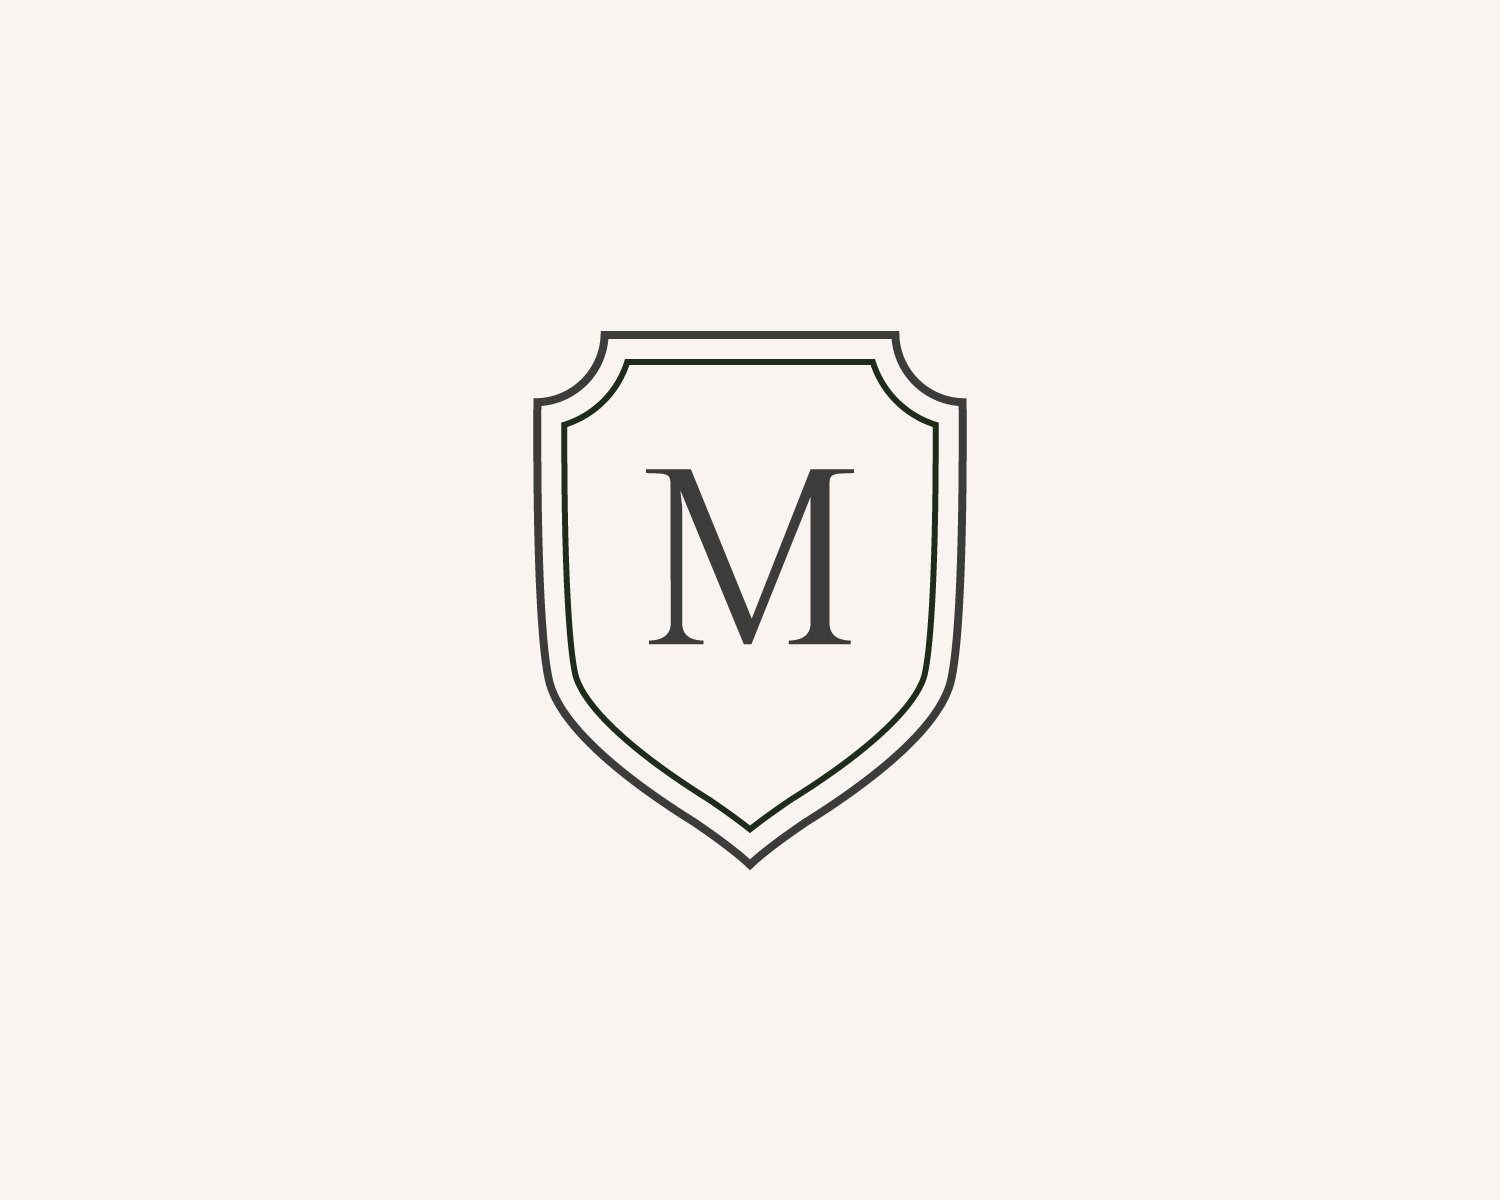 Madrina-Miniature-Cattle-Company-logo-#1B3.jpeg